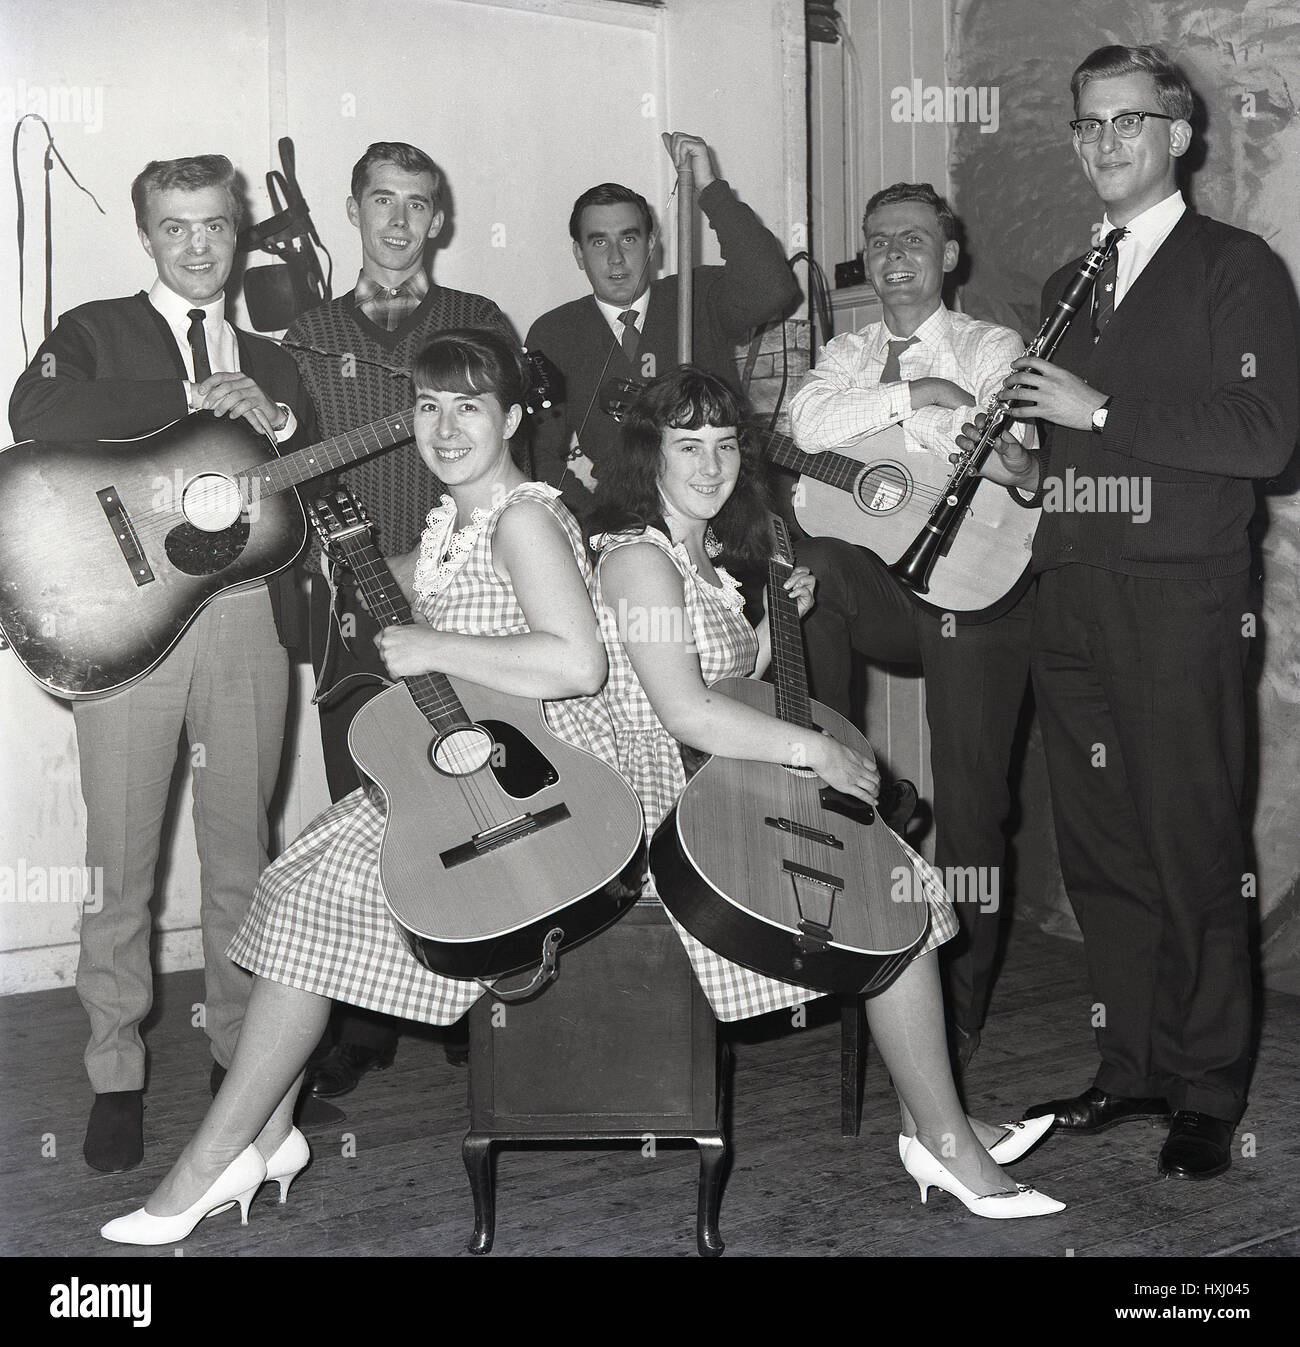 1965, sechziger Jahre Gitarre oder Folk-Gruppe, England, UK. Stockfoto